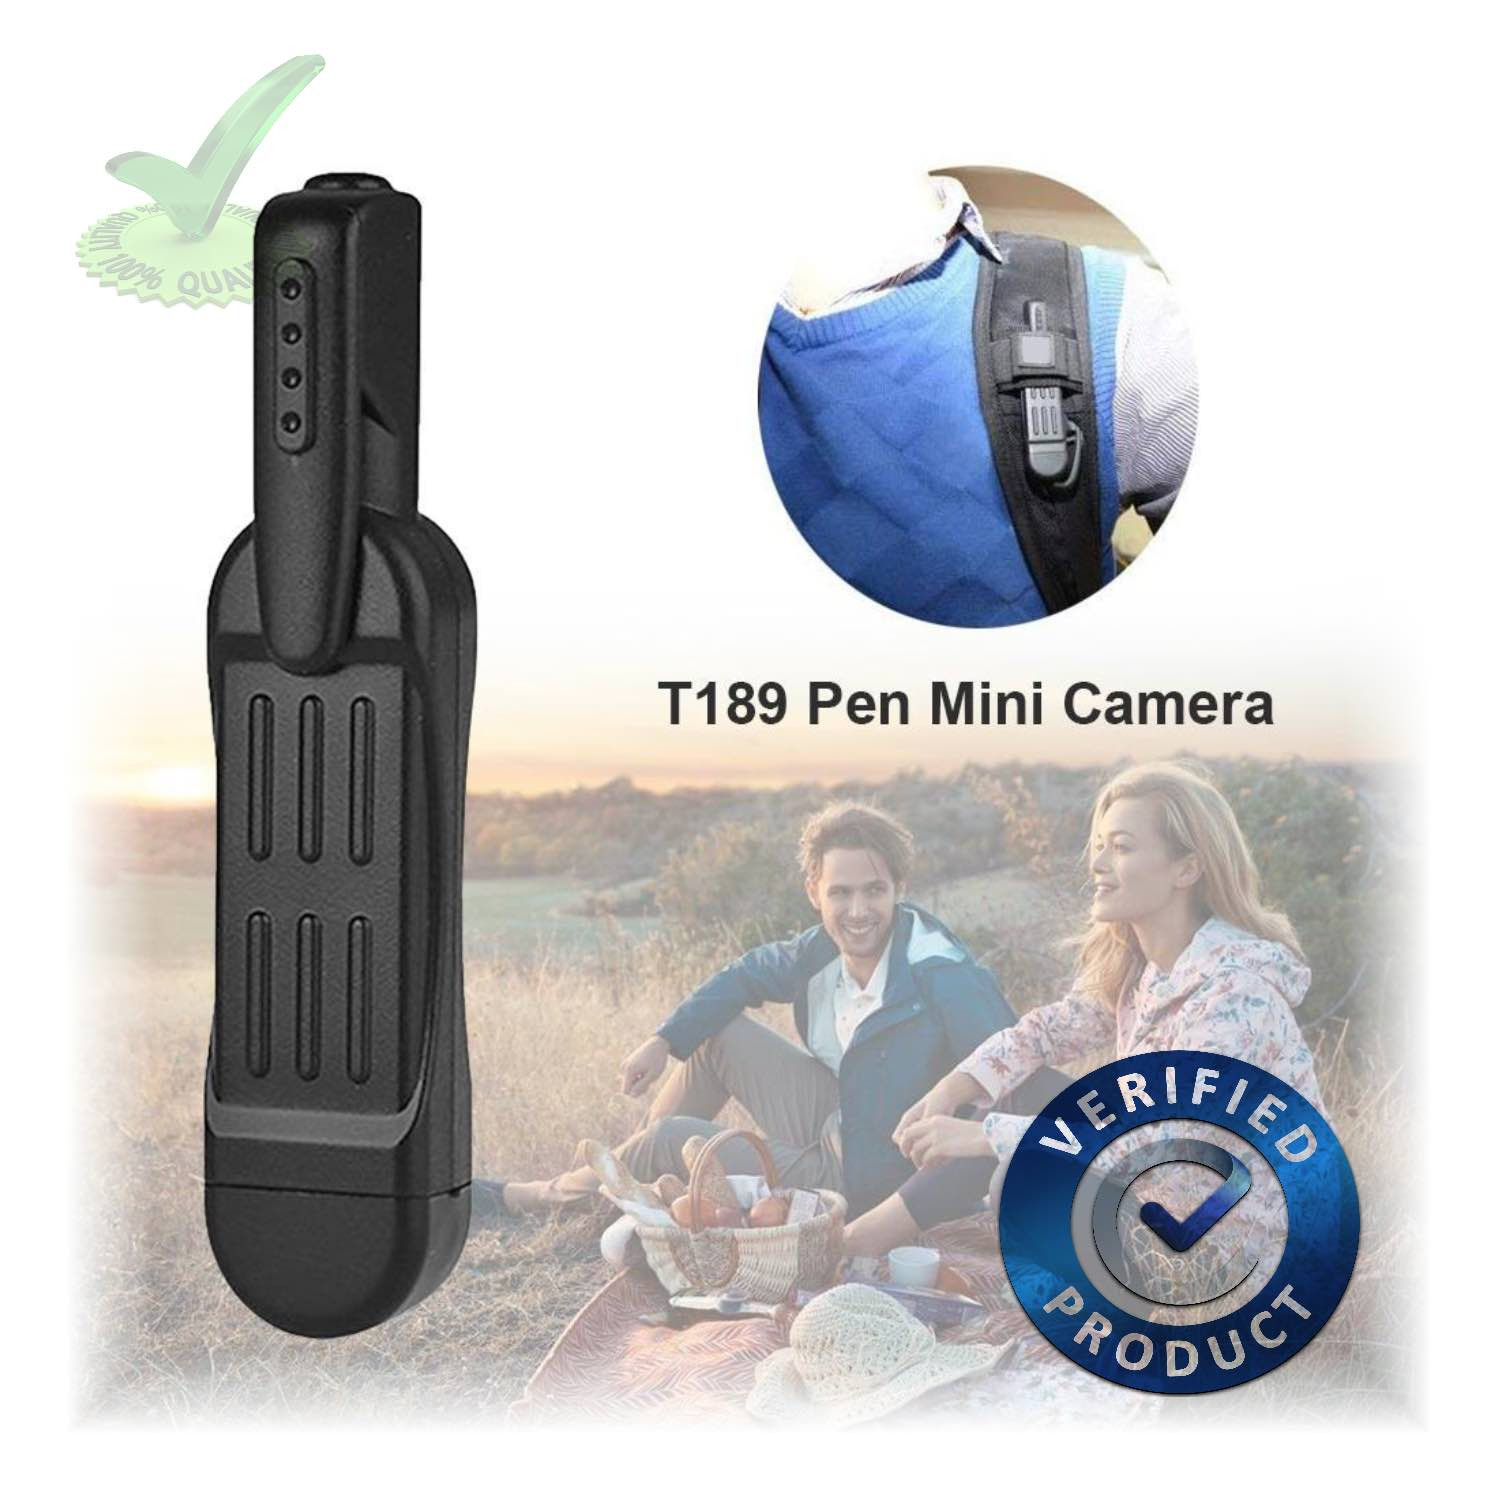 Wearable 4k Pen Camera with Mini DVR